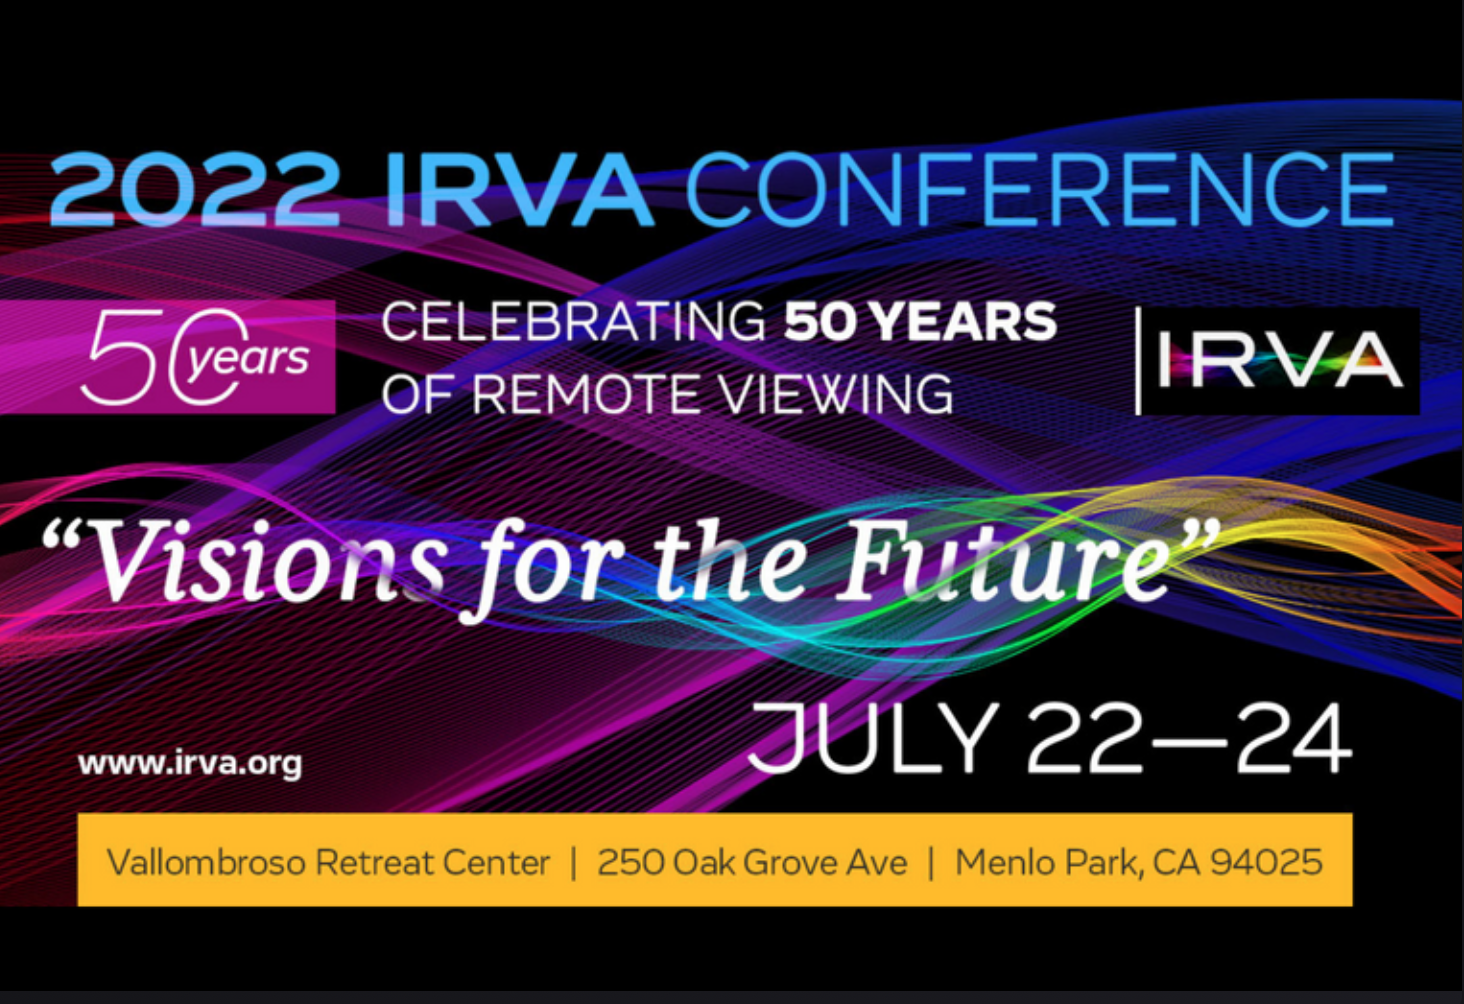 IRVA 2022 Conference Announcement